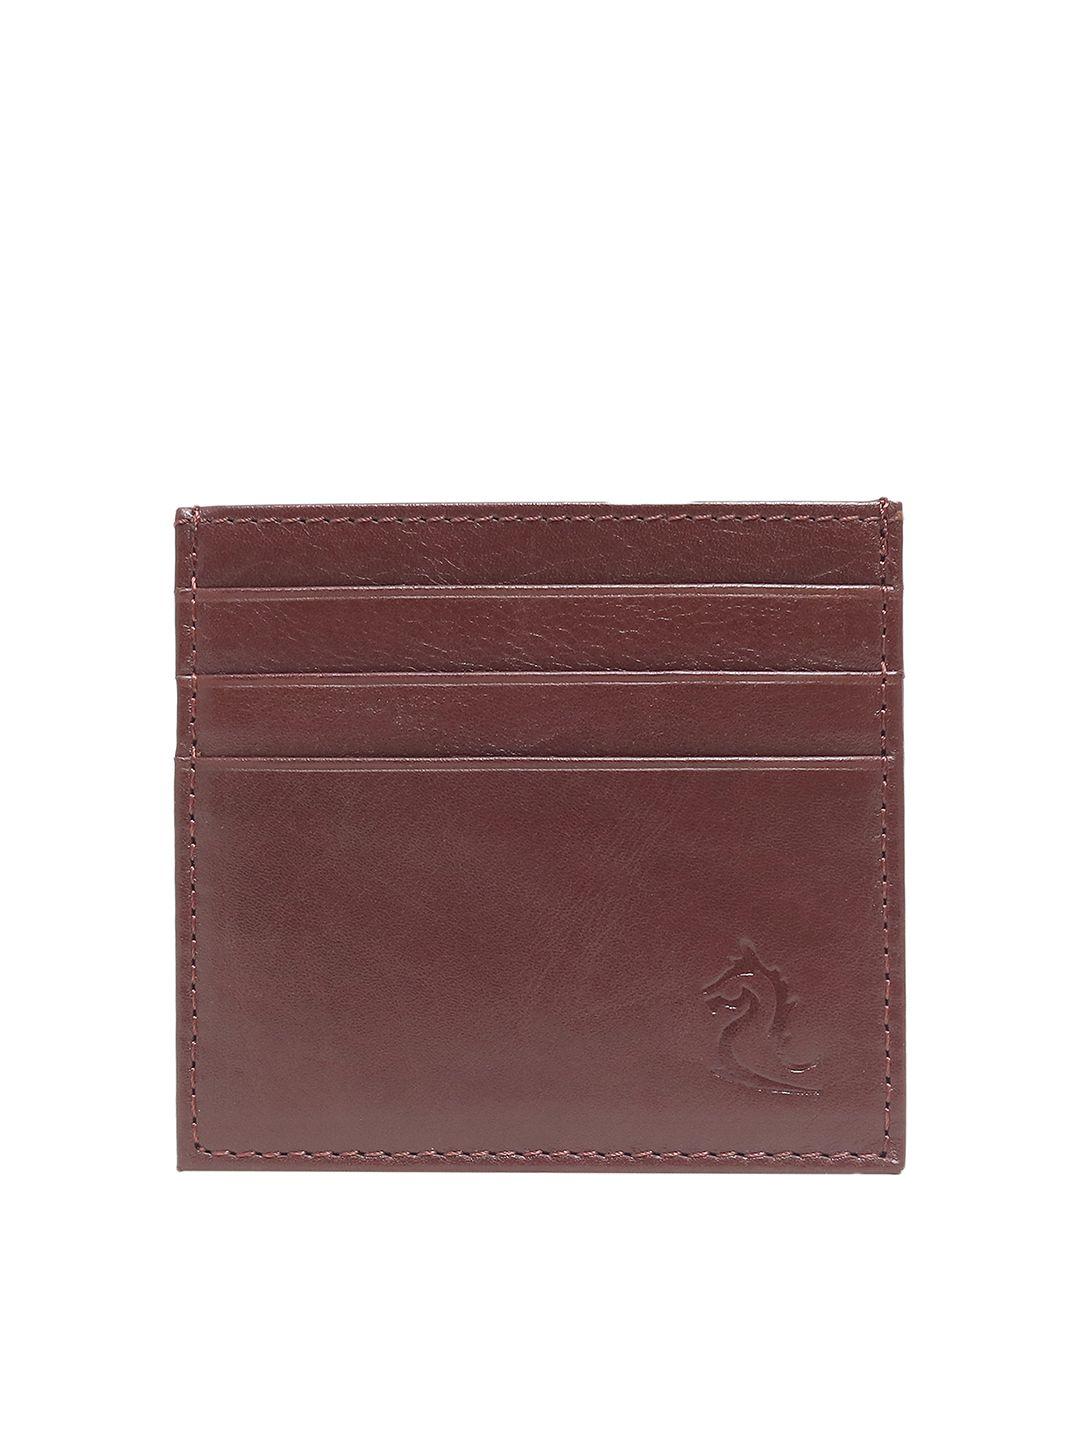 kara unisex tan solid leather card holder